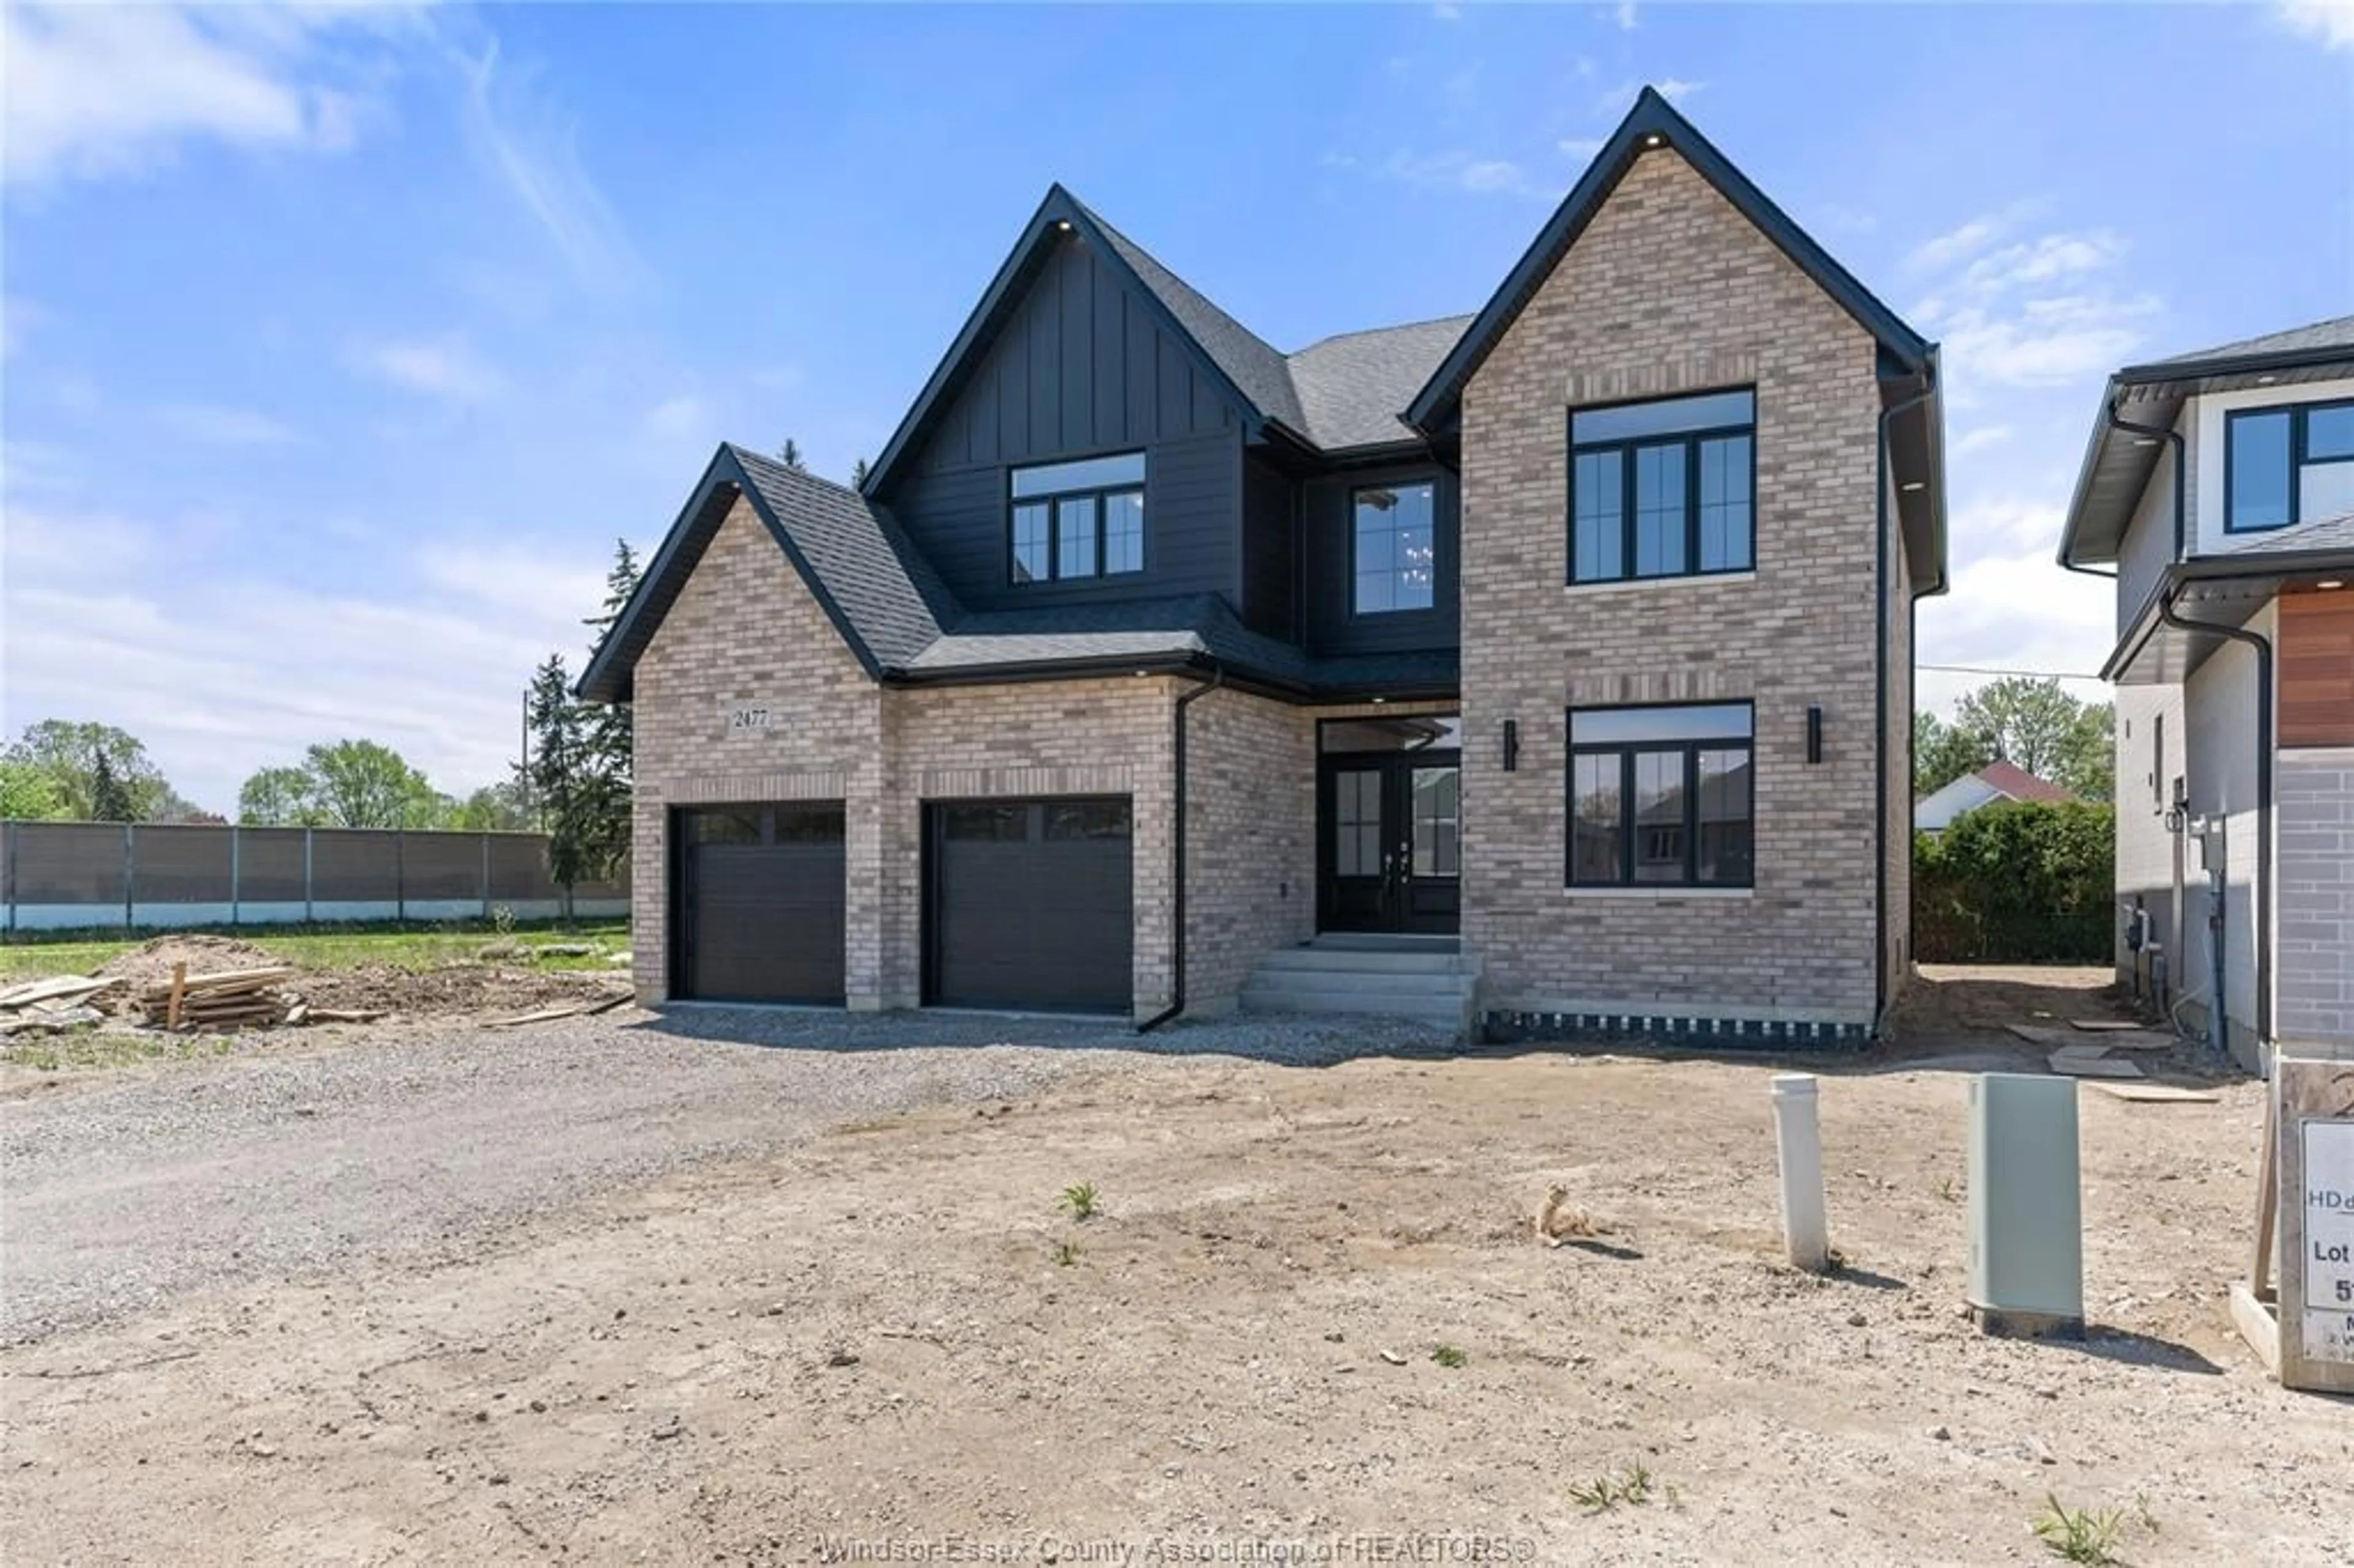 Home with brick exterior material for 2477 PARTINGTON Ave, Windsor Ontario N9E 0A9